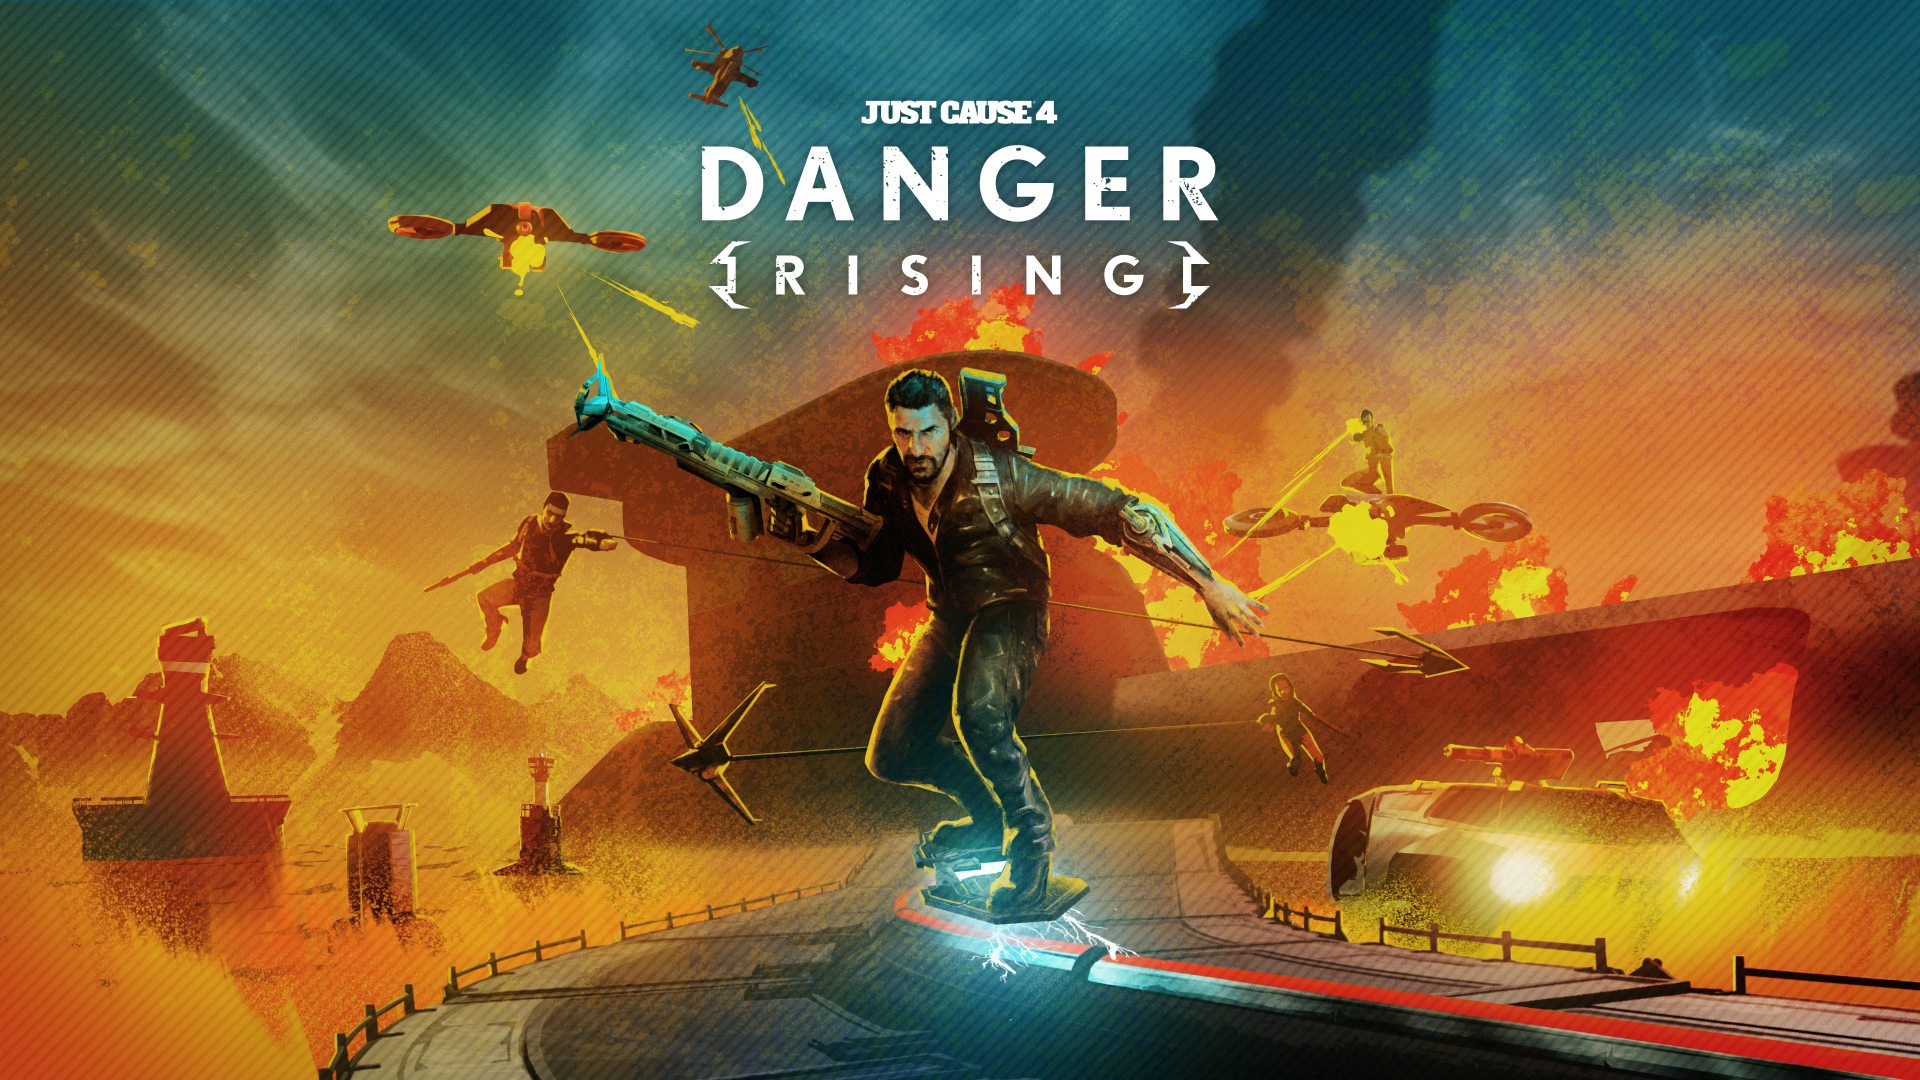 Just Cause 4 - DLC "Danger Rising" ستصل إلى أجهزة الكمبيوتر الشخصية ، PS4 و XB1 في 29 أغسطس ؛ أول لقطات ومقطورة